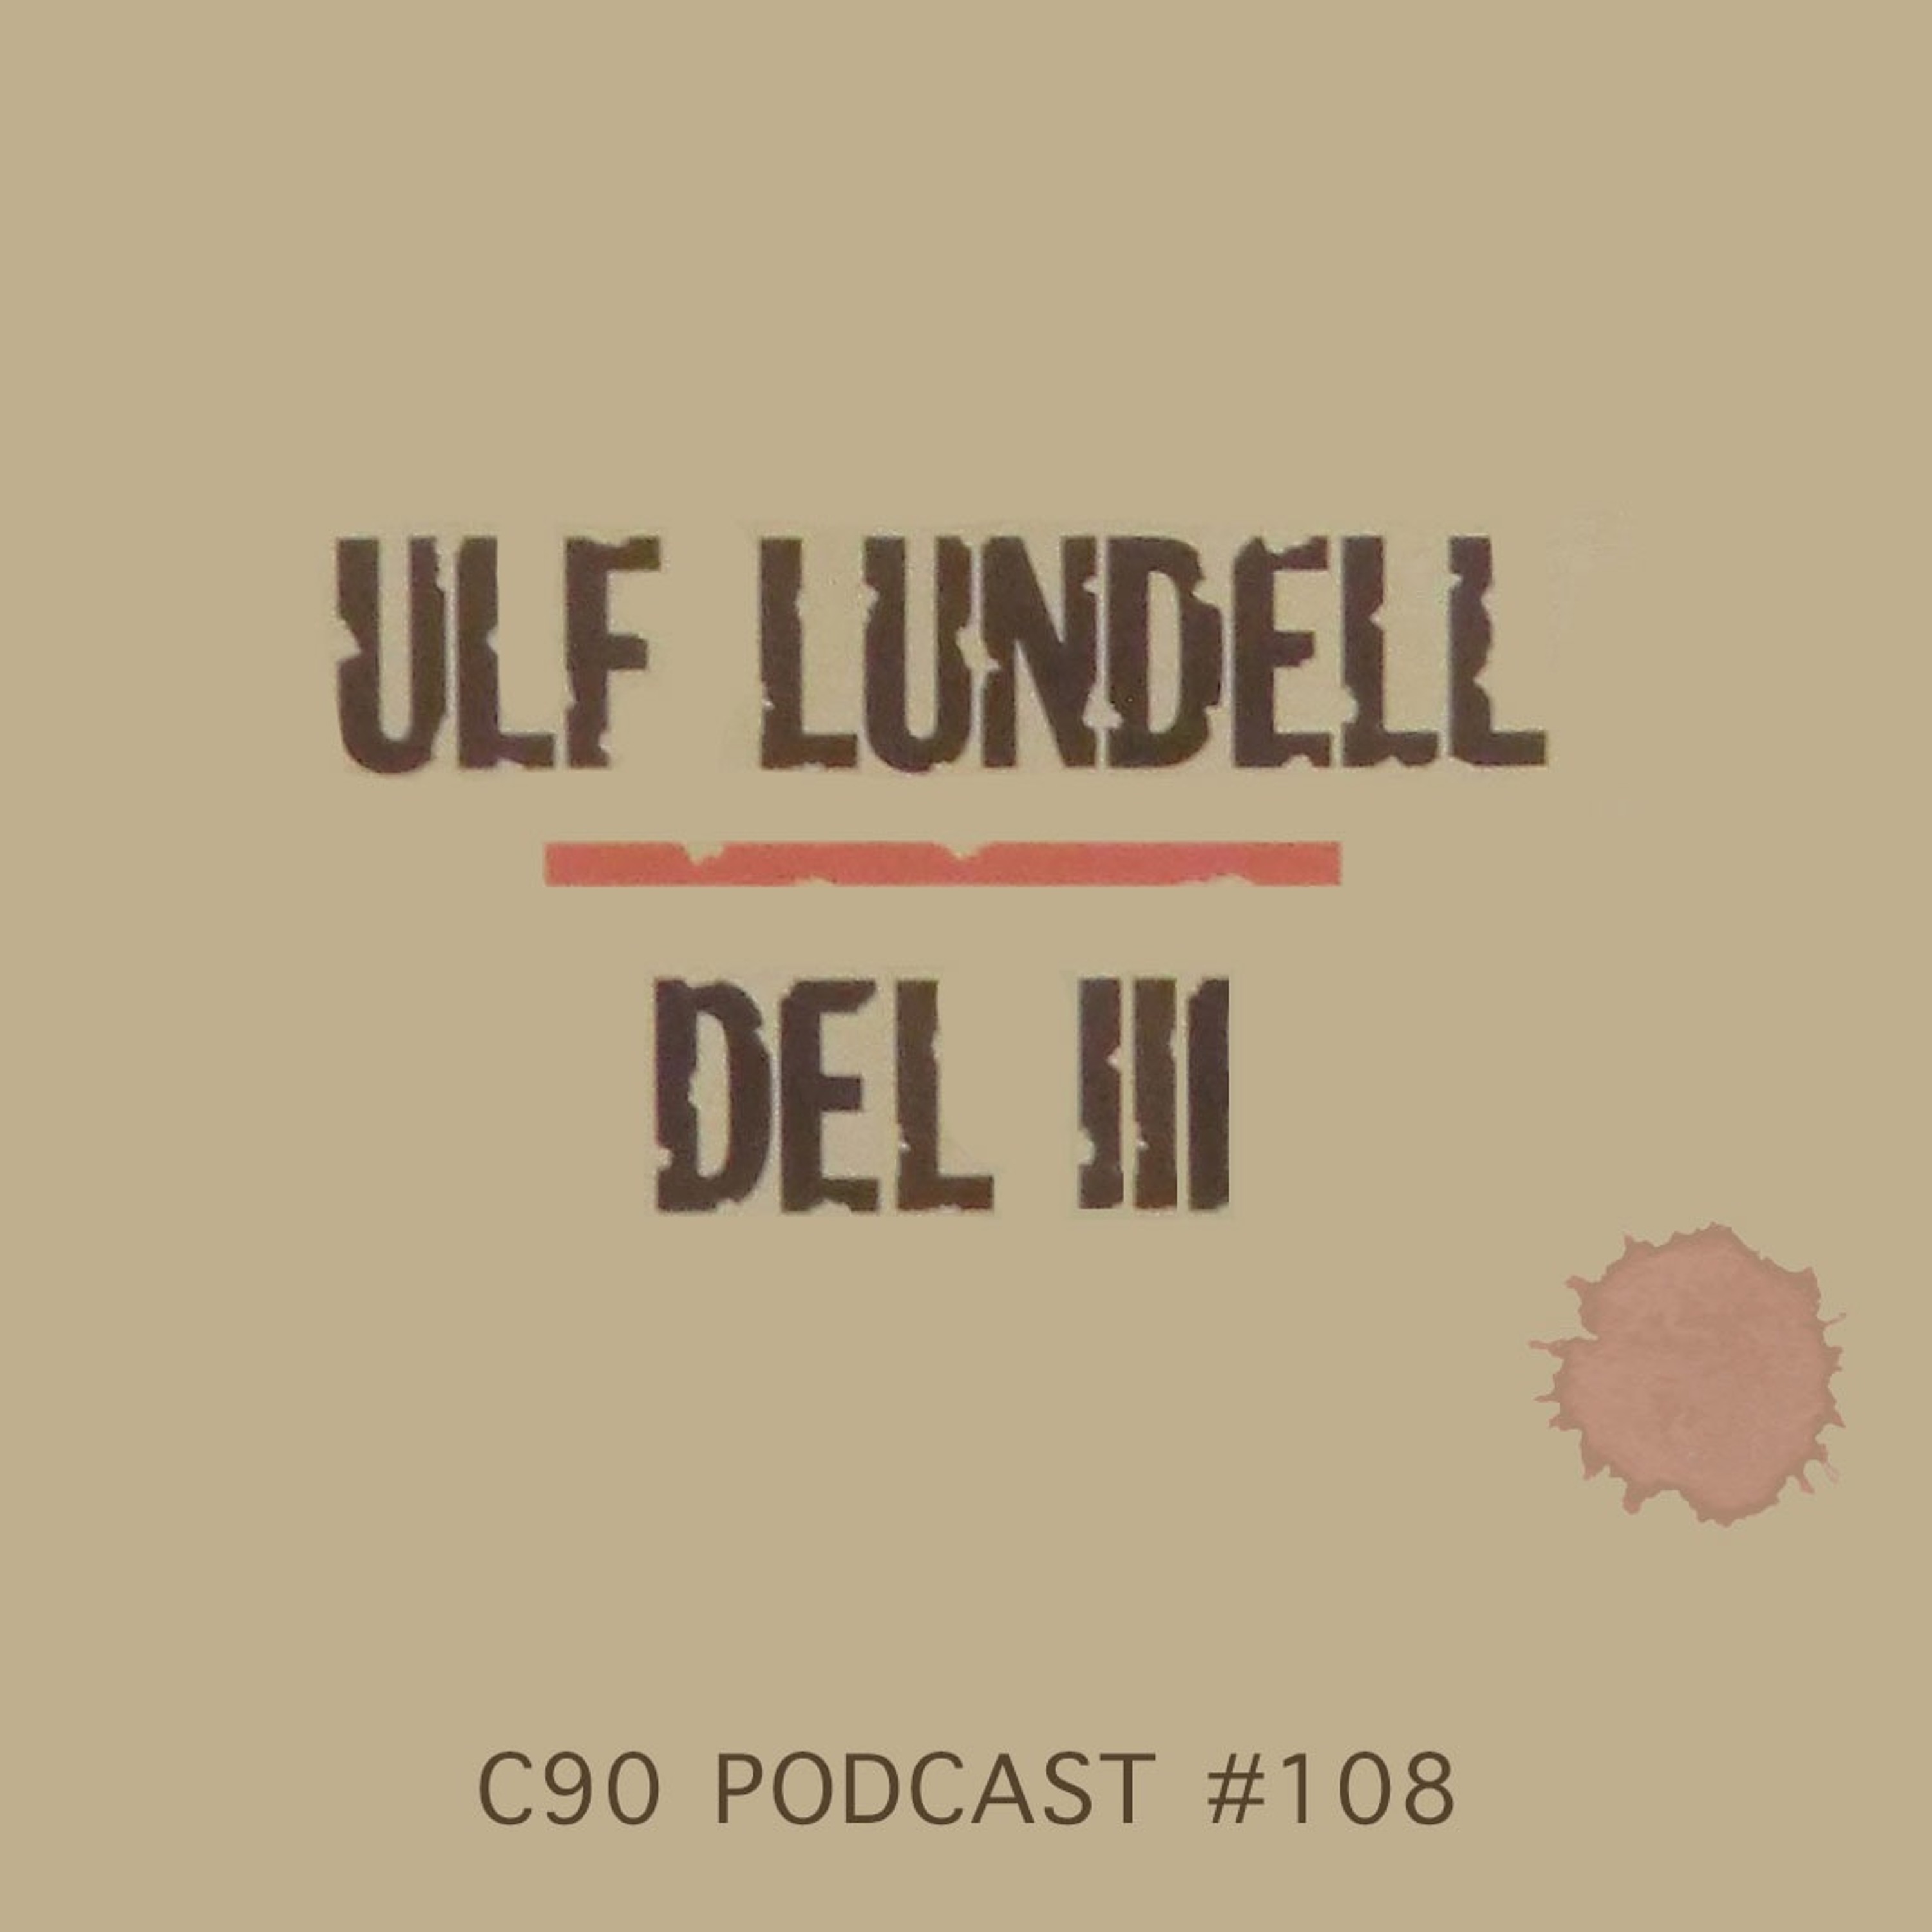 C90 #108: Ulf Lundell del 3